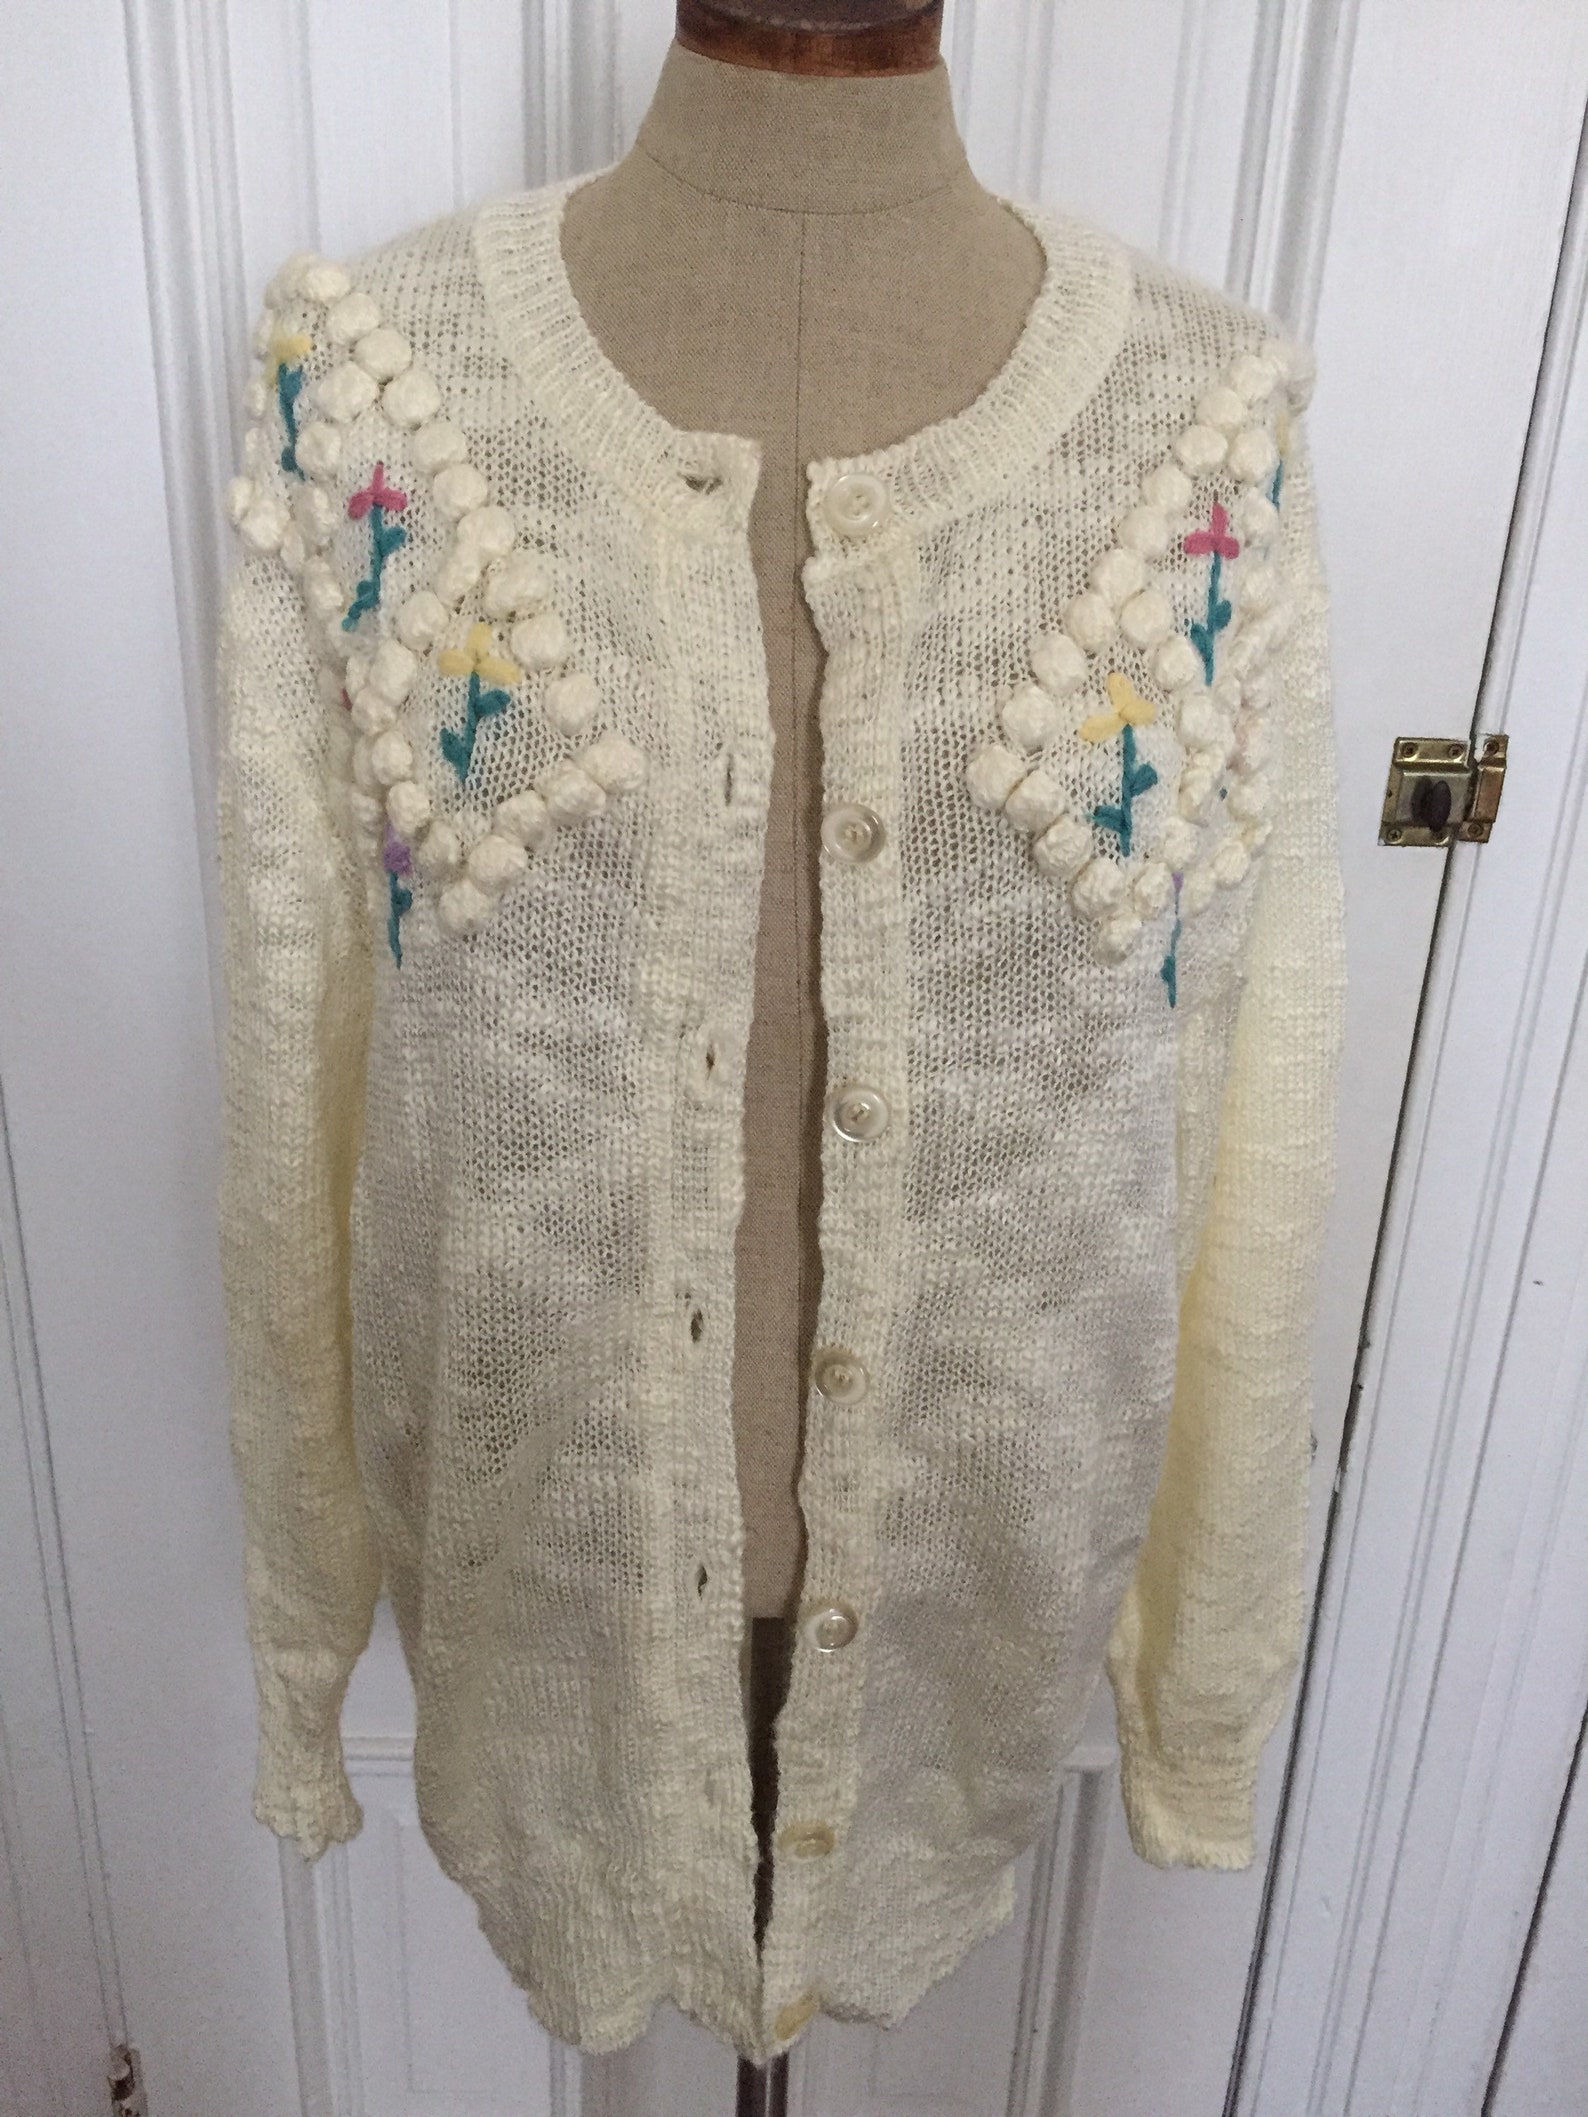 Vintage 1970s knit cottage core cardigan sweater | Etsy